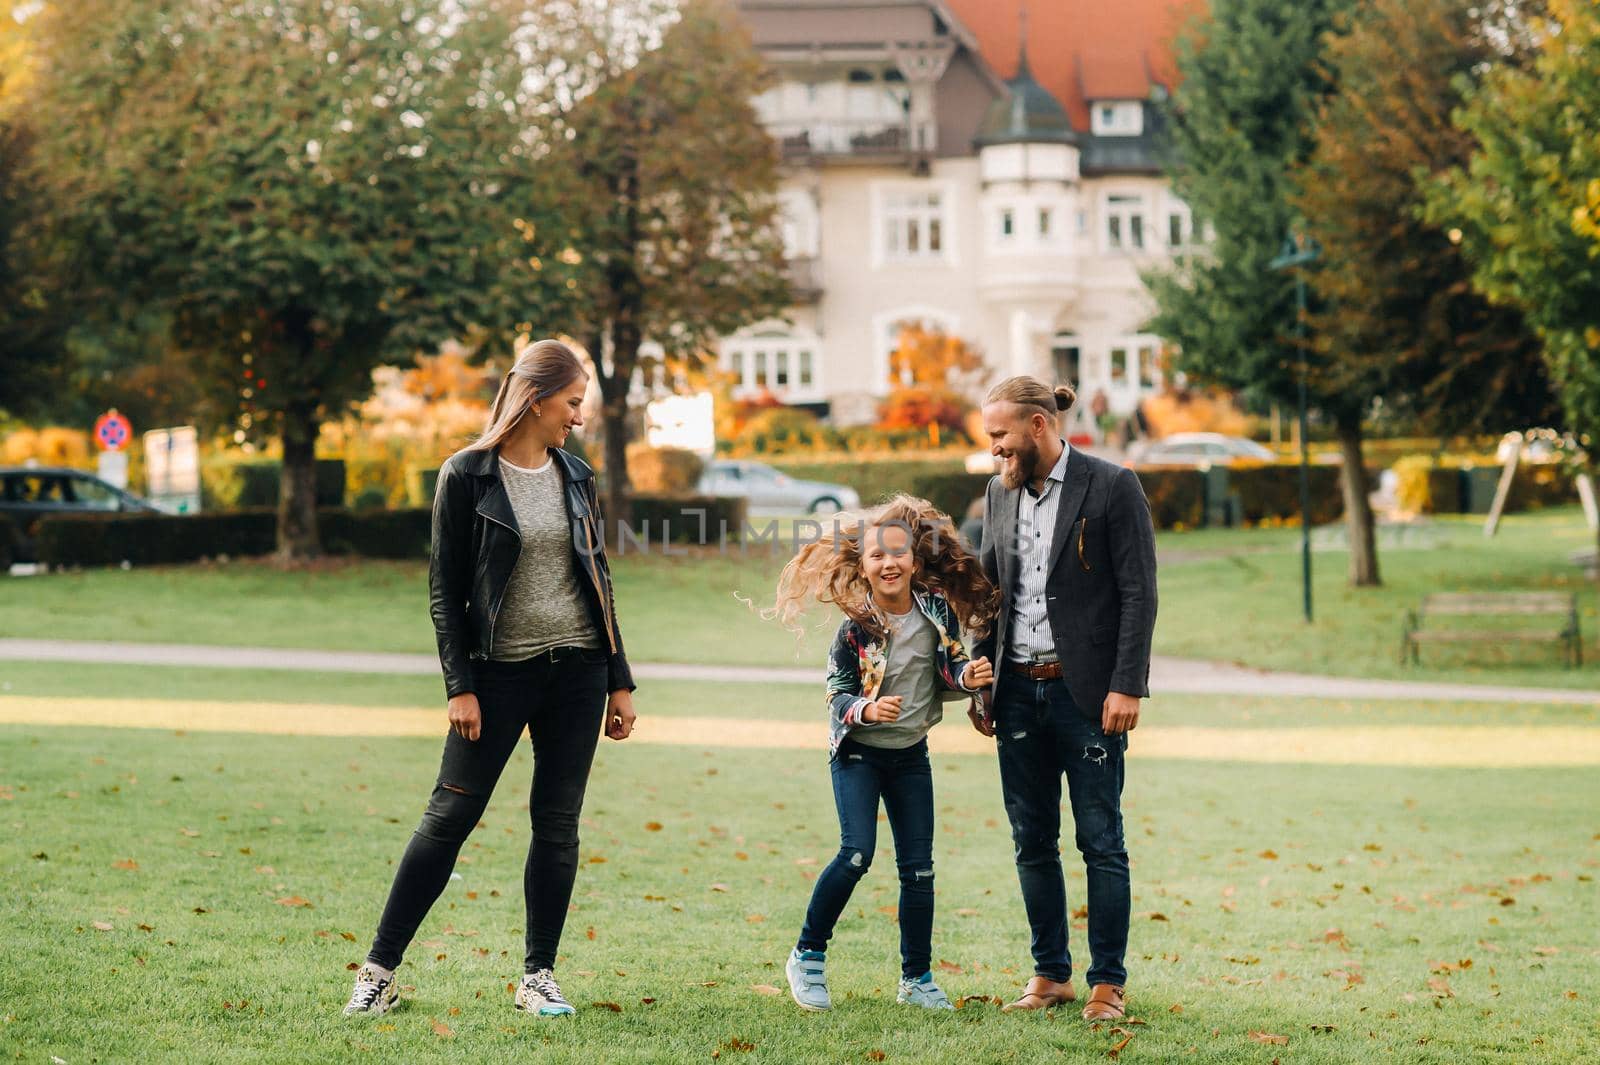 A happy family of three runs through the grass in Austria's old town.A family walks through a small town in Austria.Europe.Velden am werten Zee.